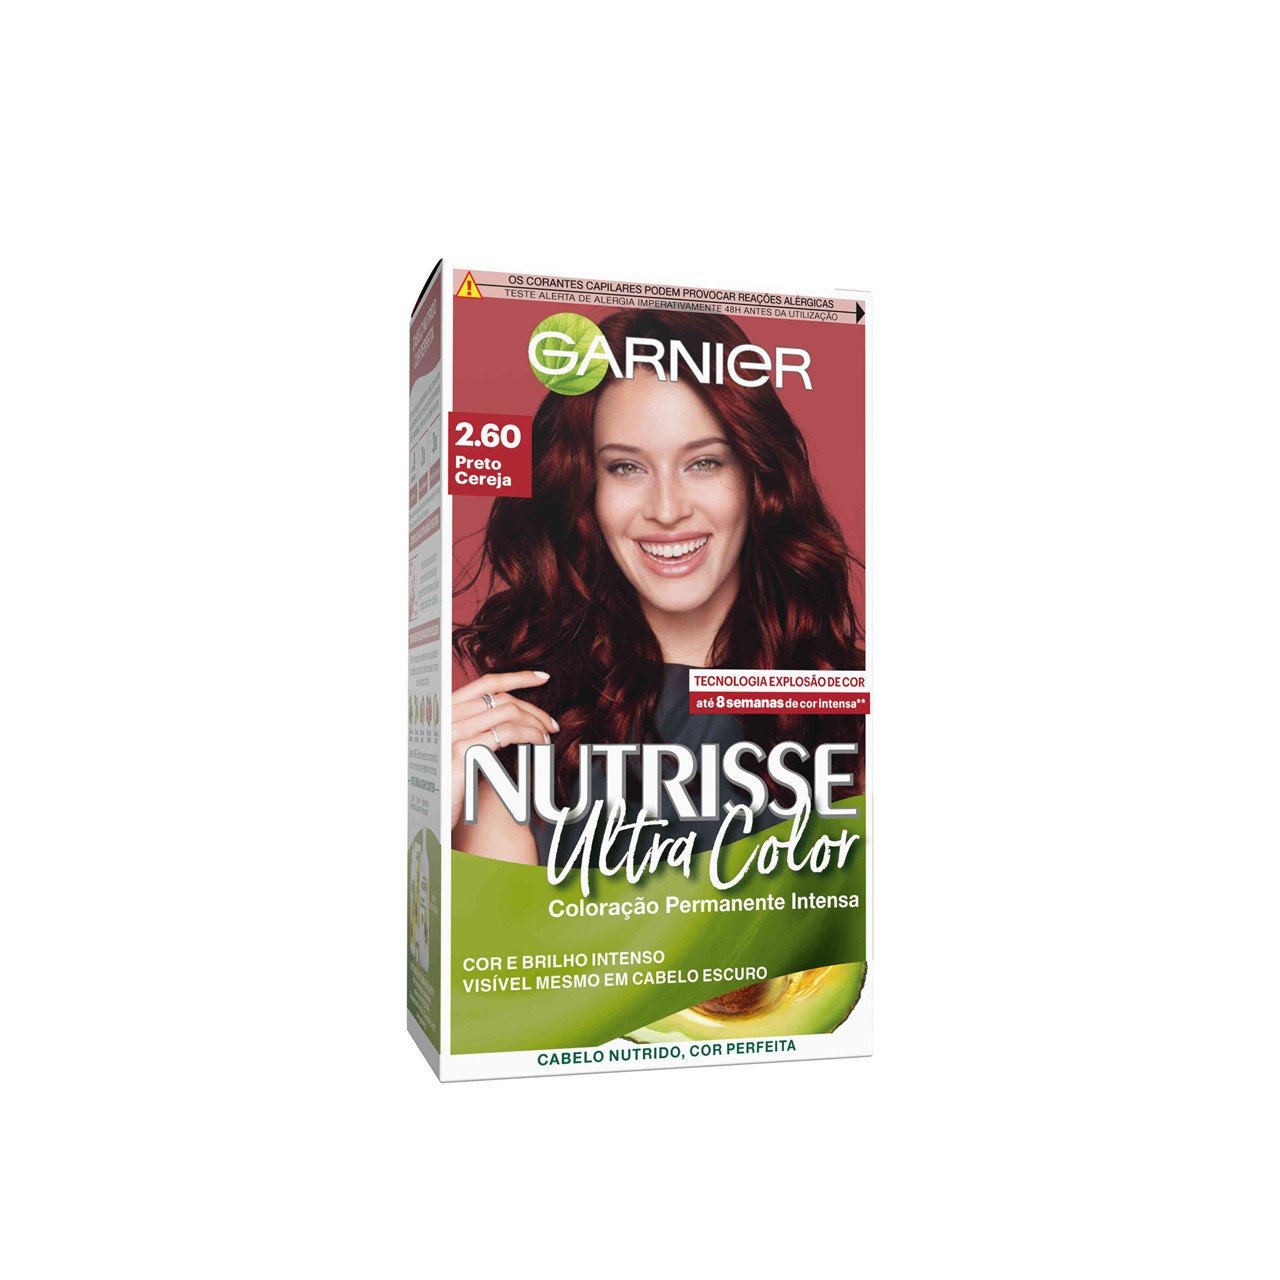 Garnier Nutrisse Ultra Color 2.60 Dark Cherry Permanent Hair Dye